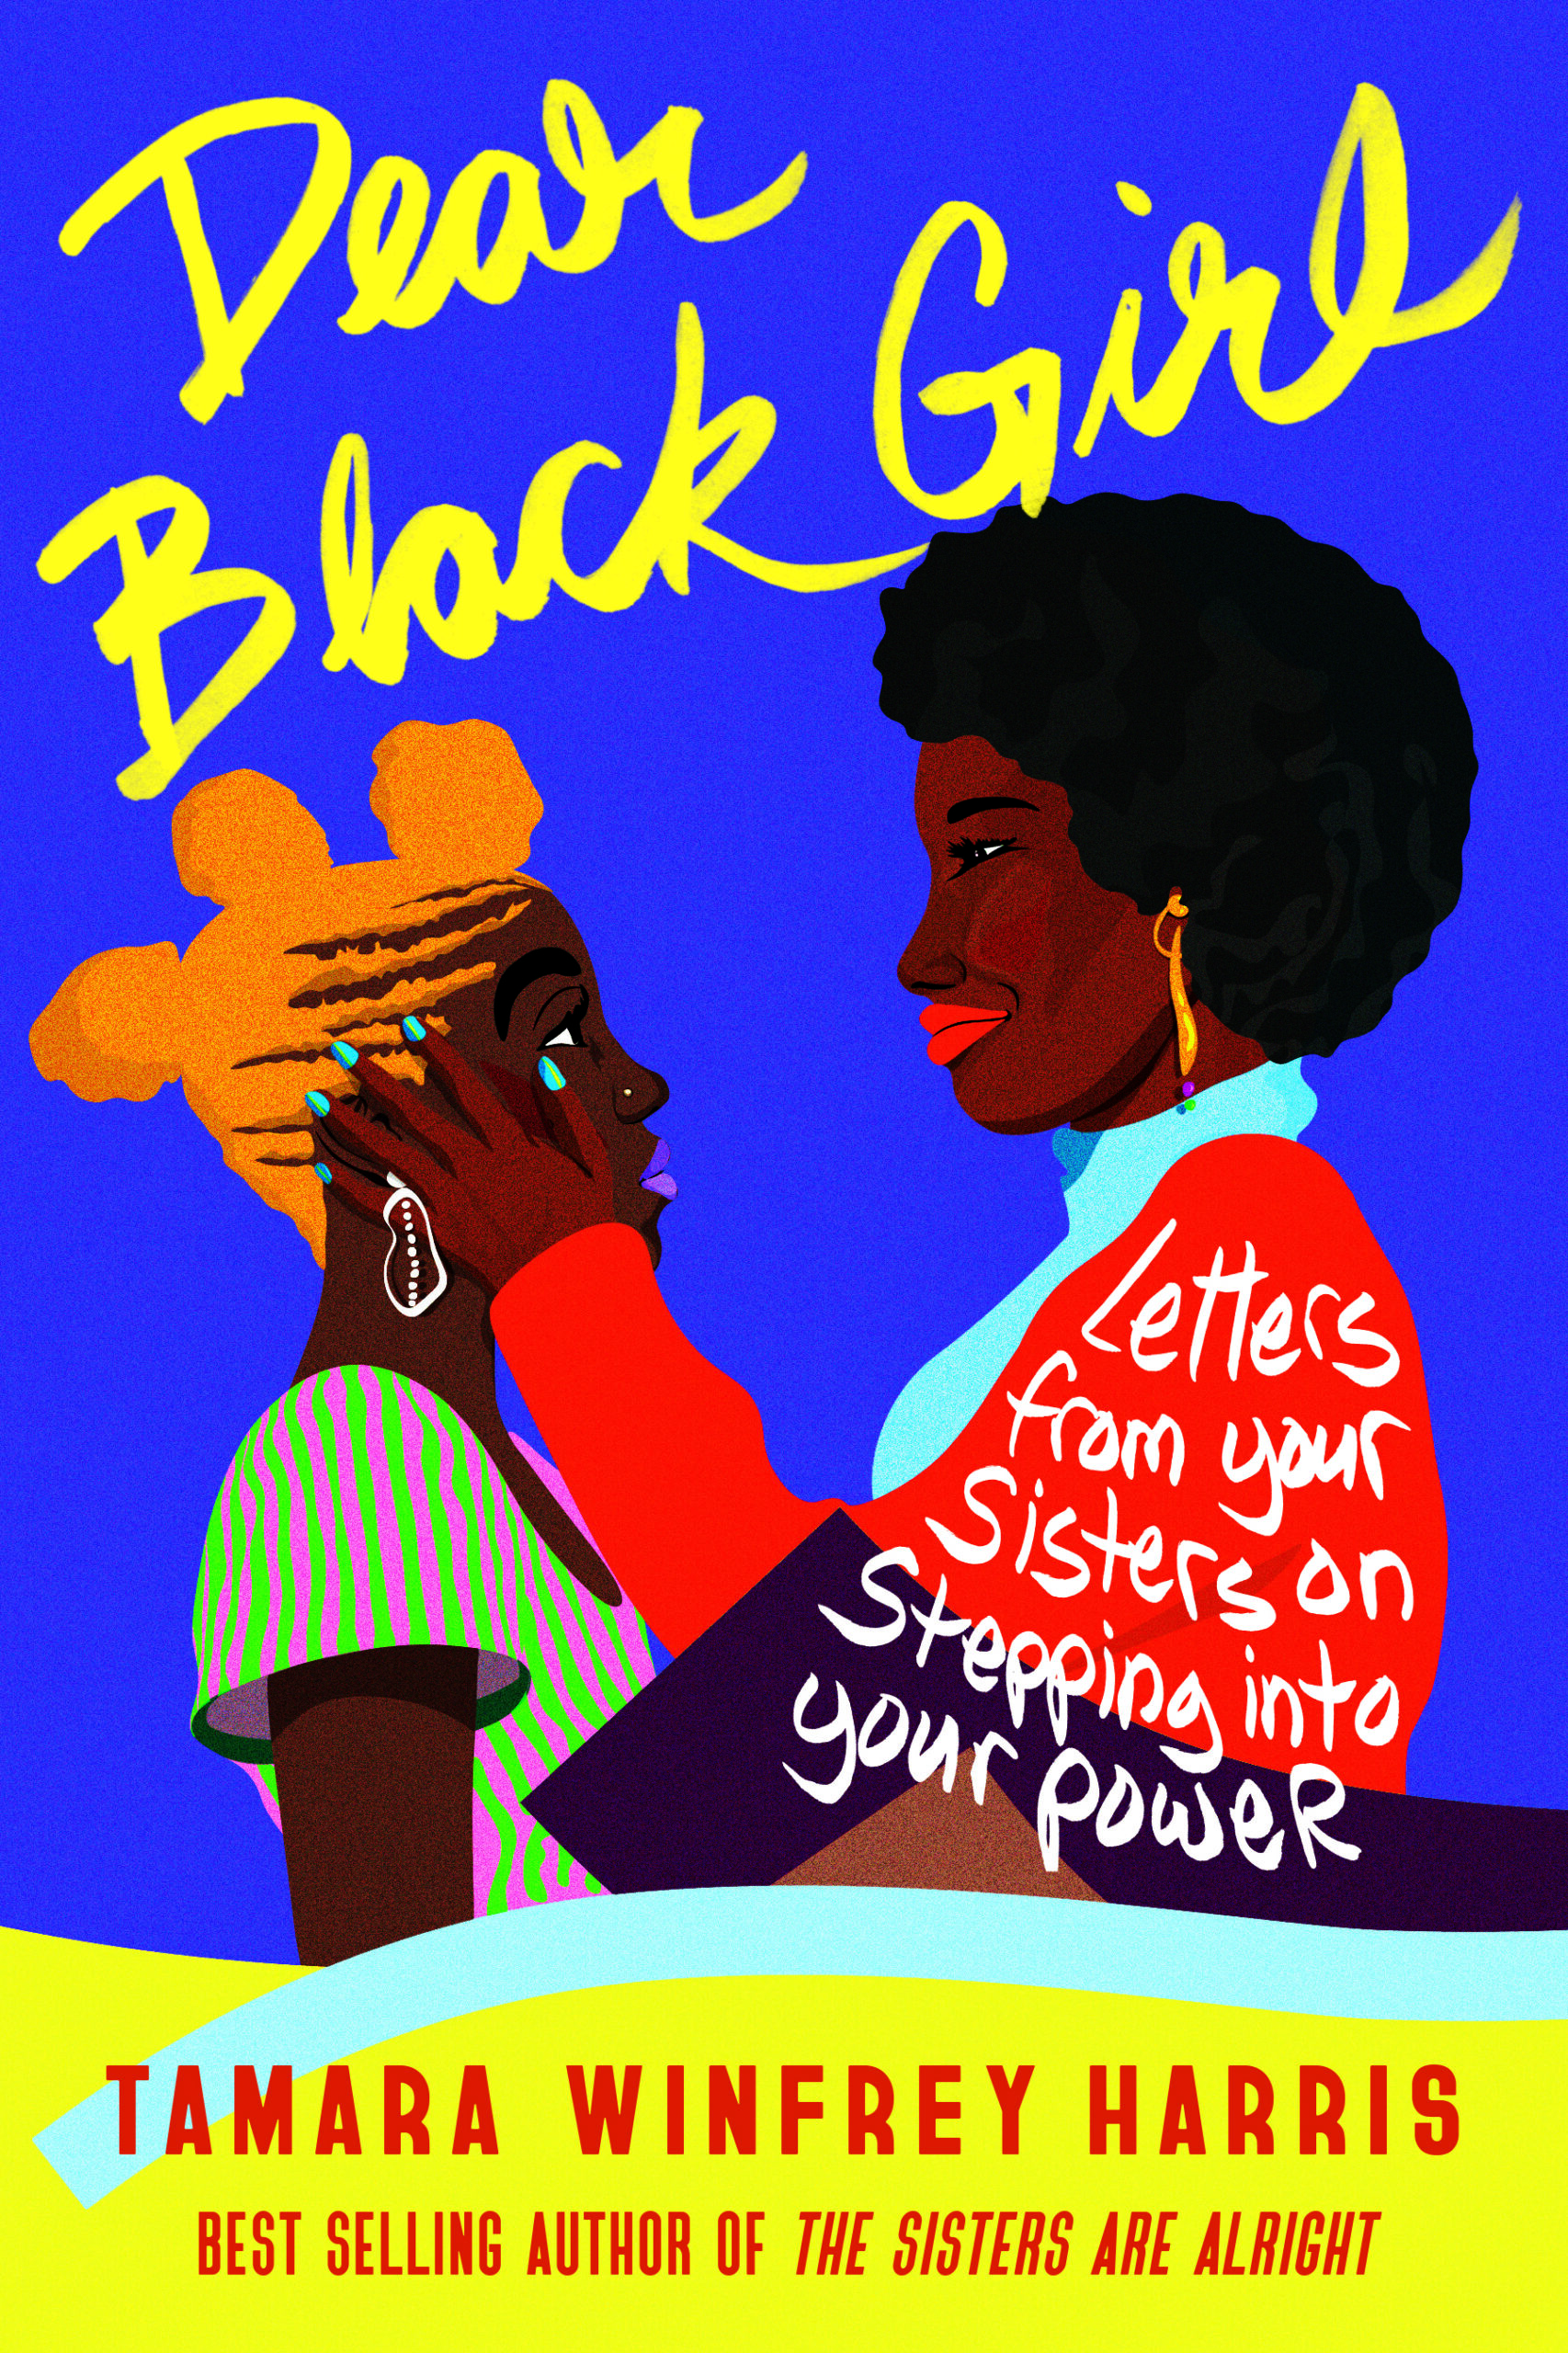 Tamara Winfrey Harris Releases ‘Dear Black Girl’ Book